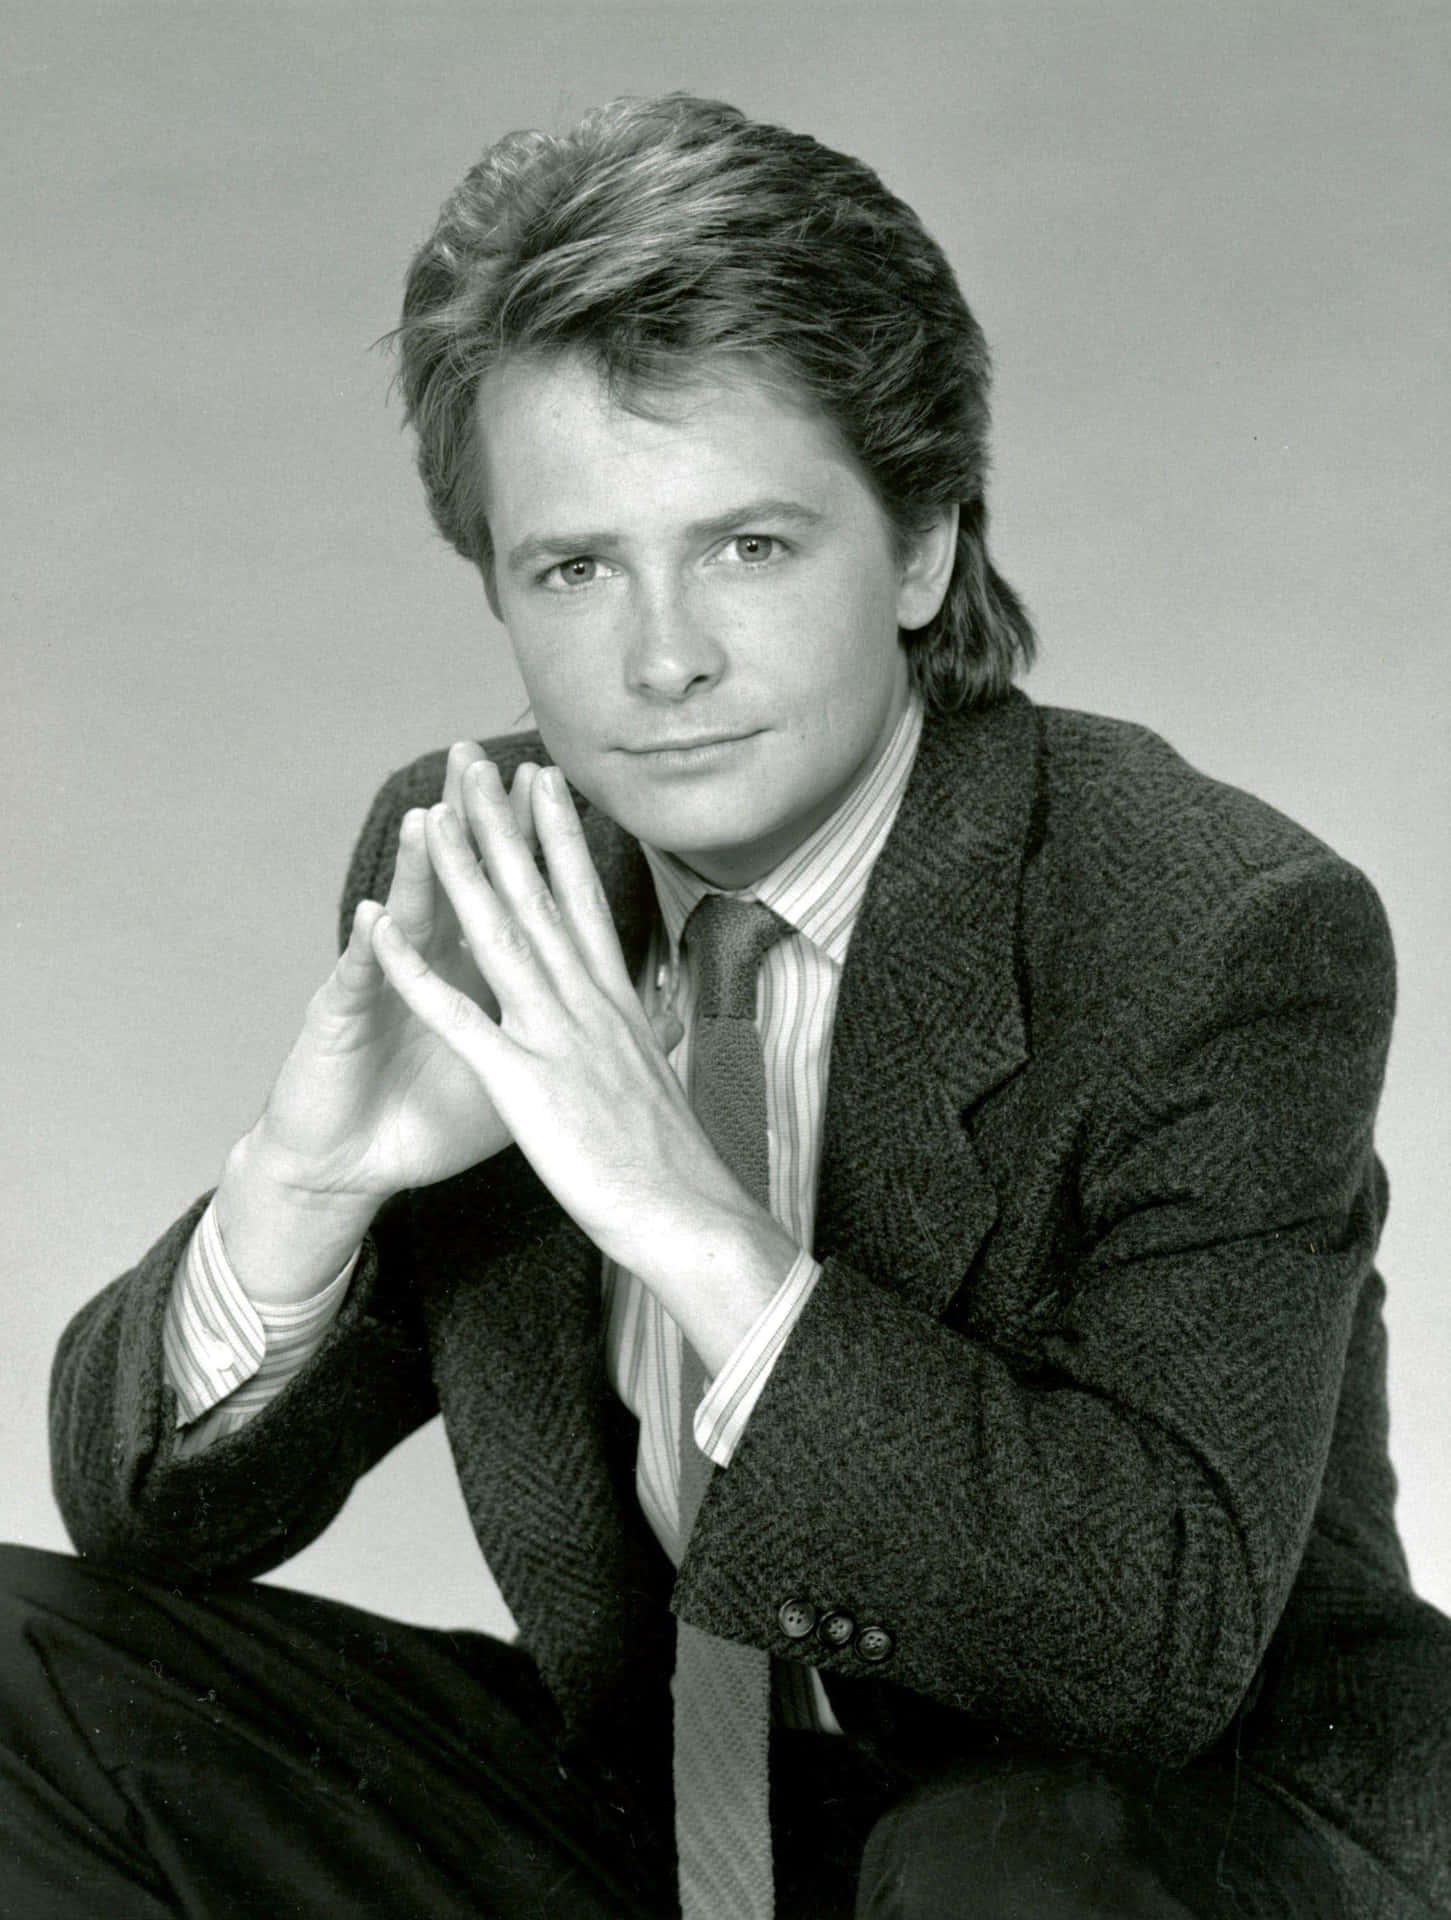 Michael J. Fox, Actor And Activist Background